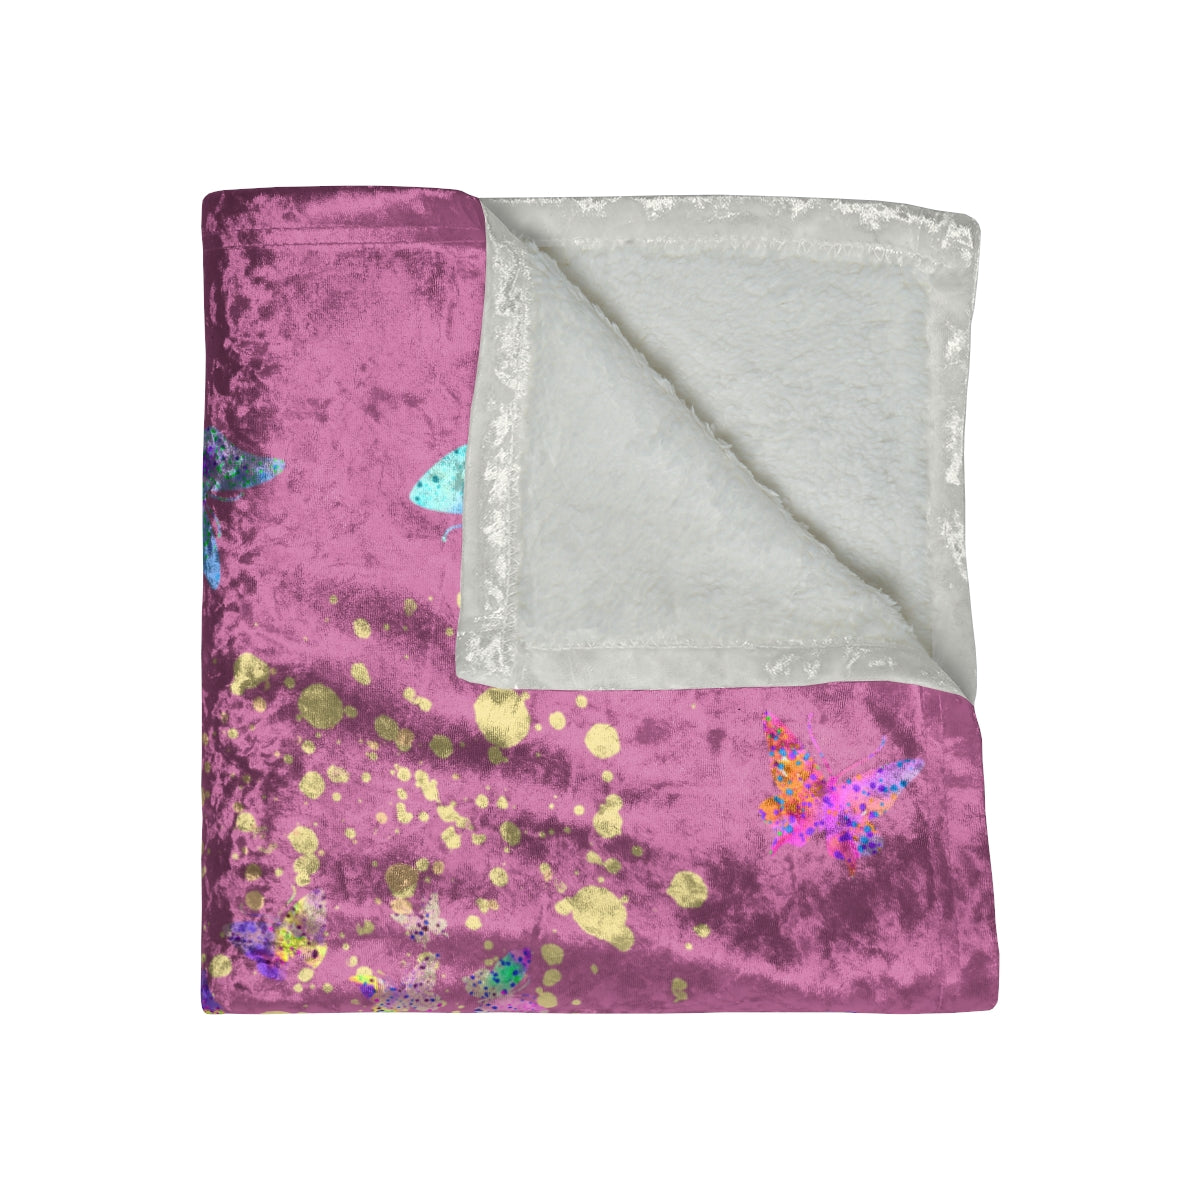 Crushed Velvet Blanket - Butterflies with Heart Pink